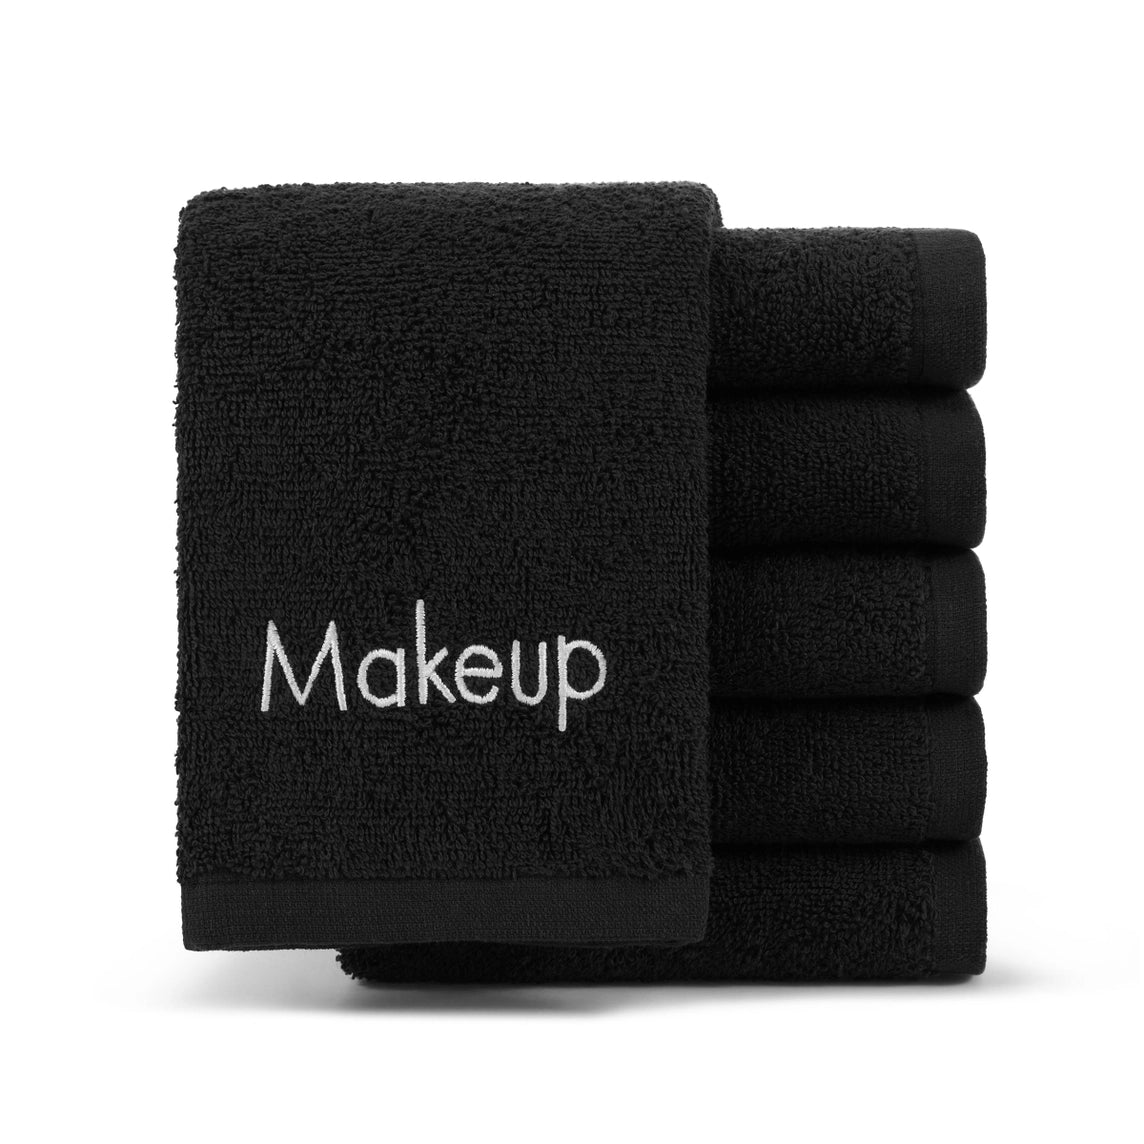 Makeup Washcloth - set of 6